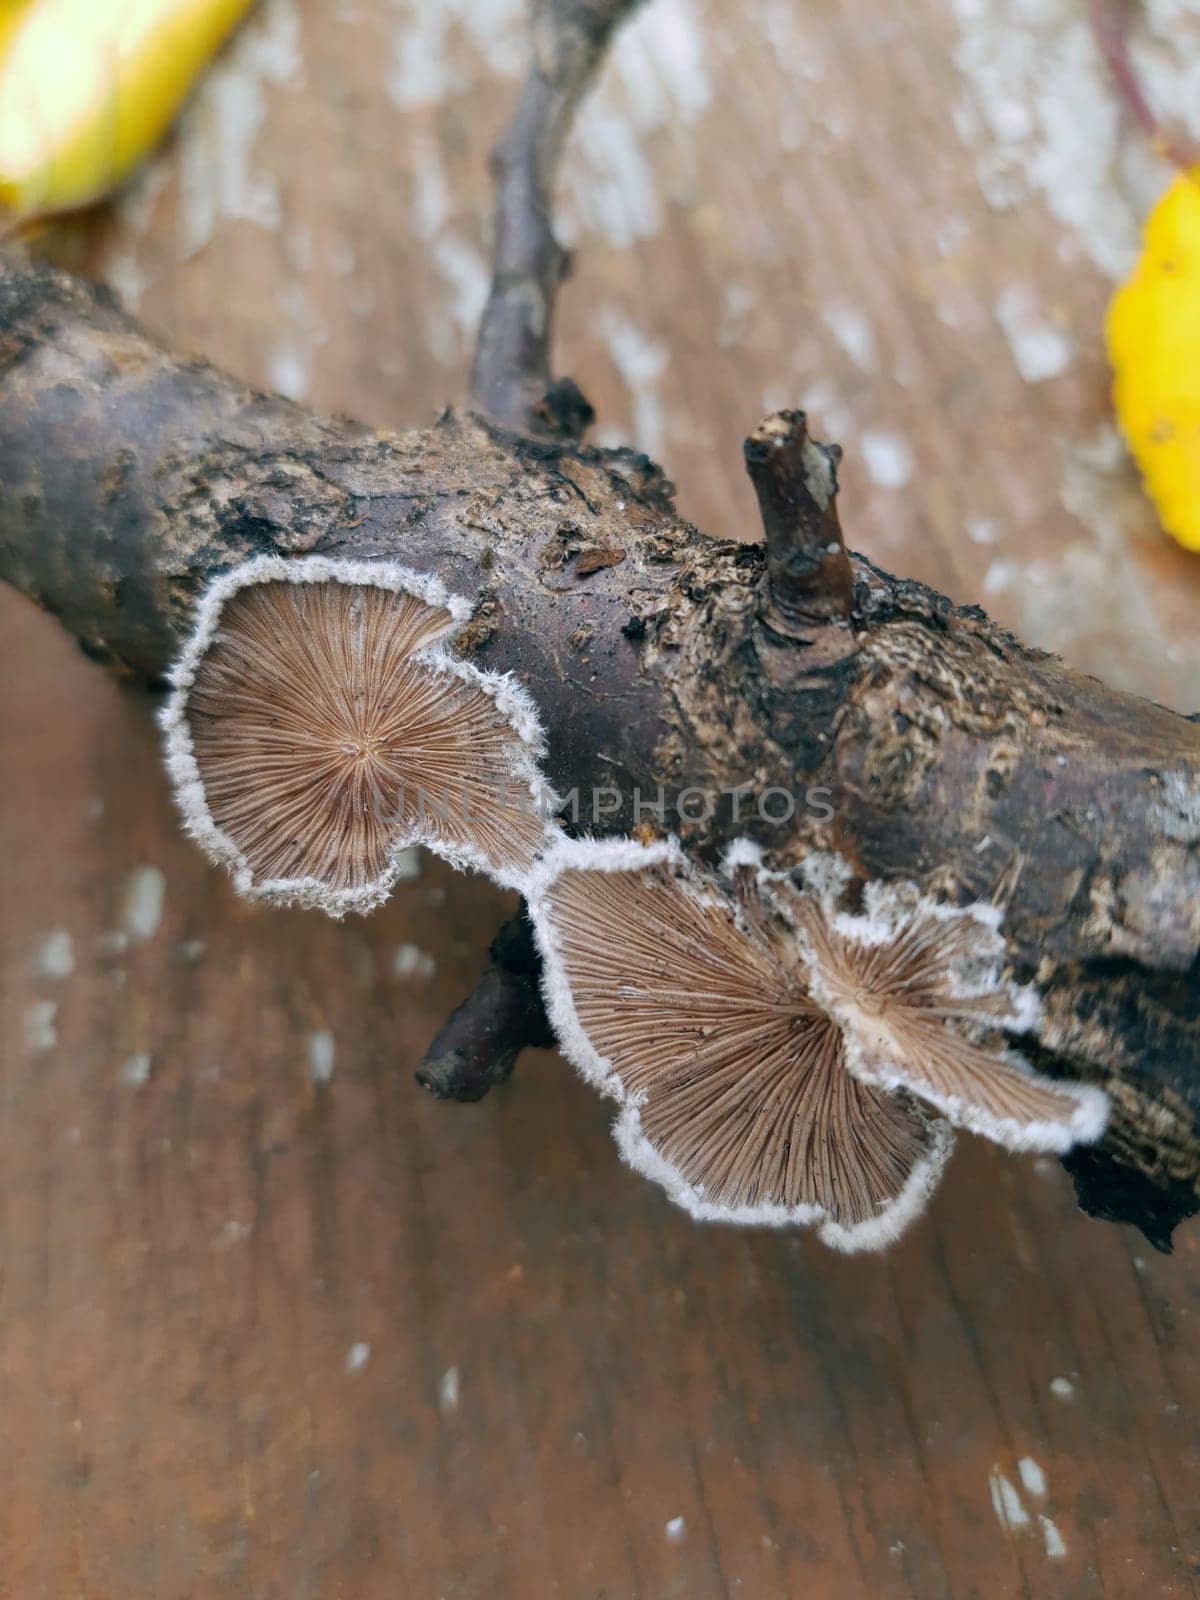 Tinder fungus on a tree trunk close-up. Tinder fungus.